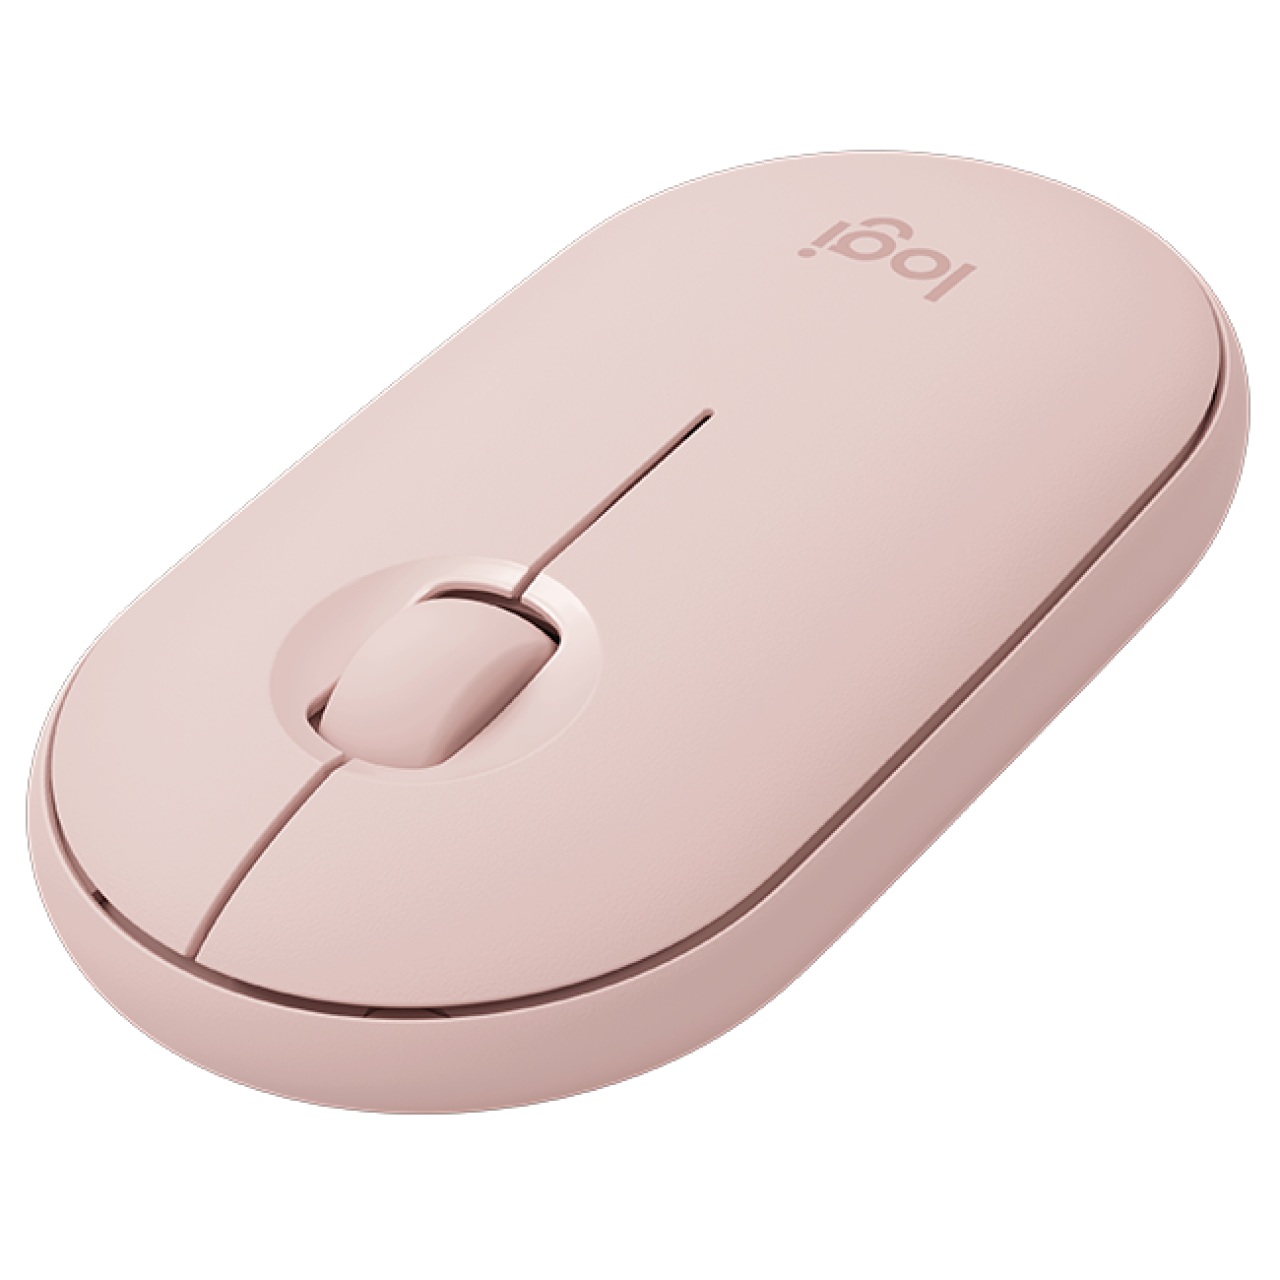 LOGITECH Pebble M350 Kablosuz + Bluetooth 1000dpi Optic Rose Mouse 910-005717